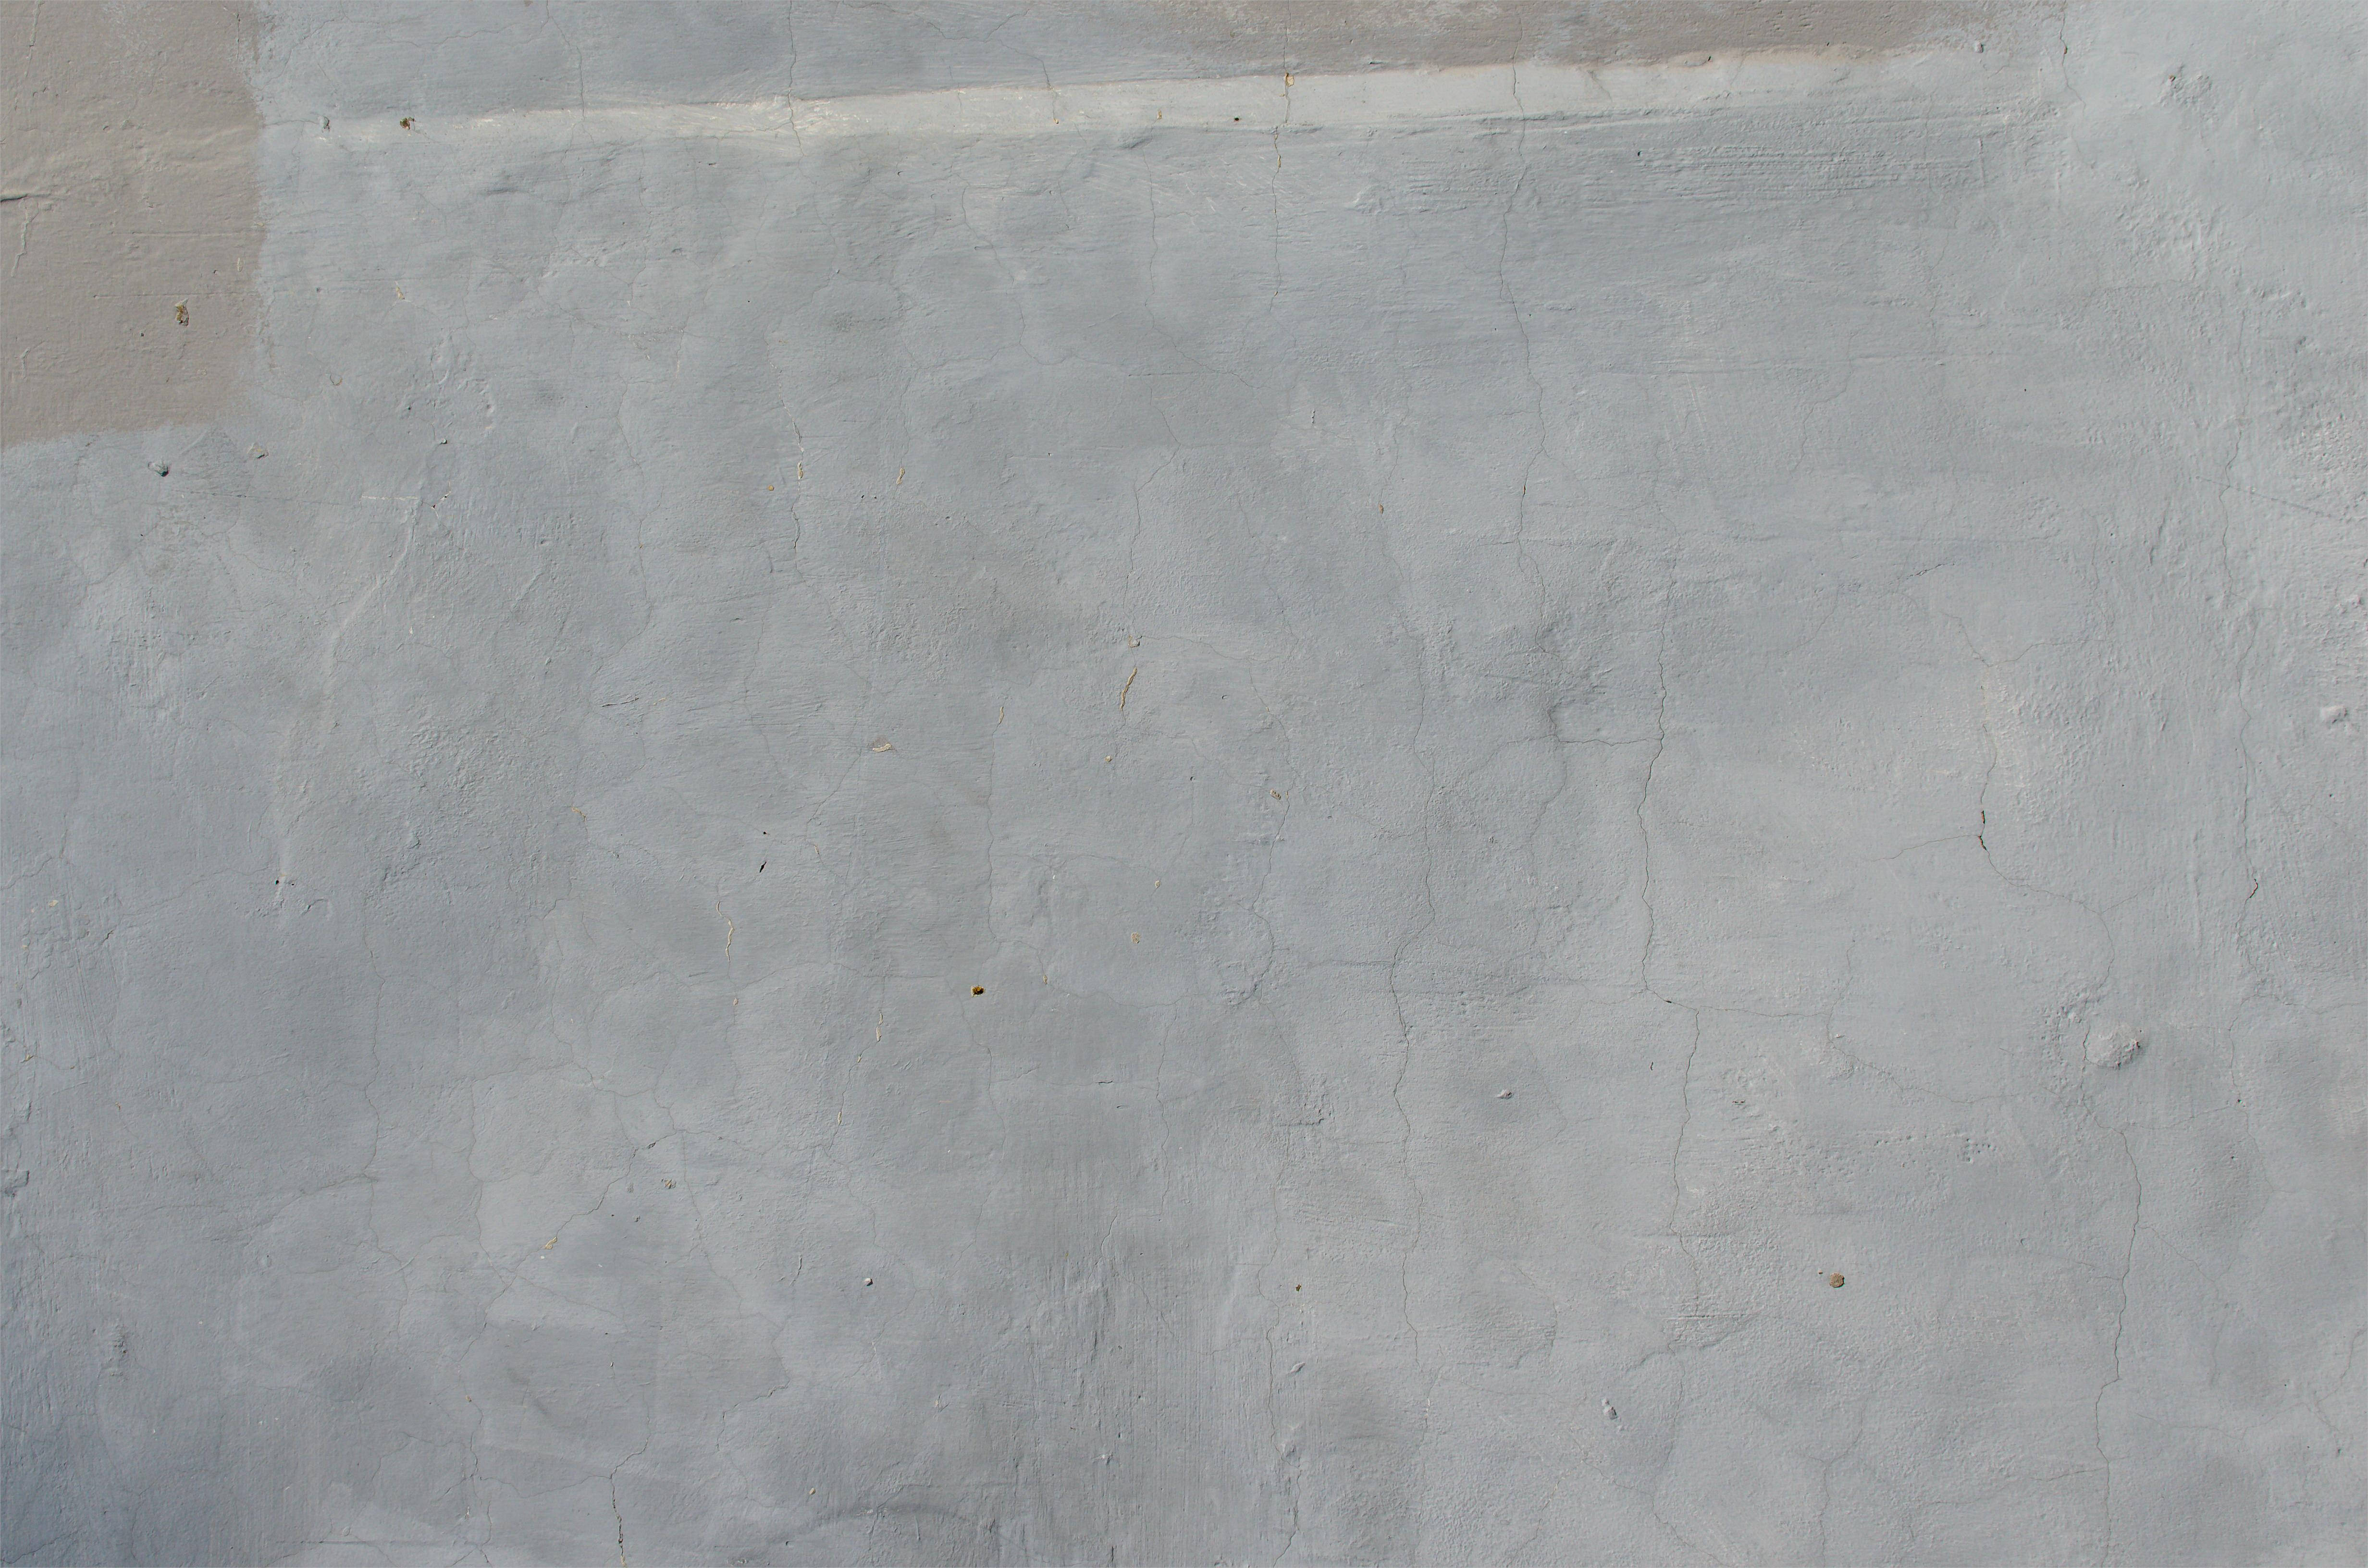 Clean White Concrete Wall Texture